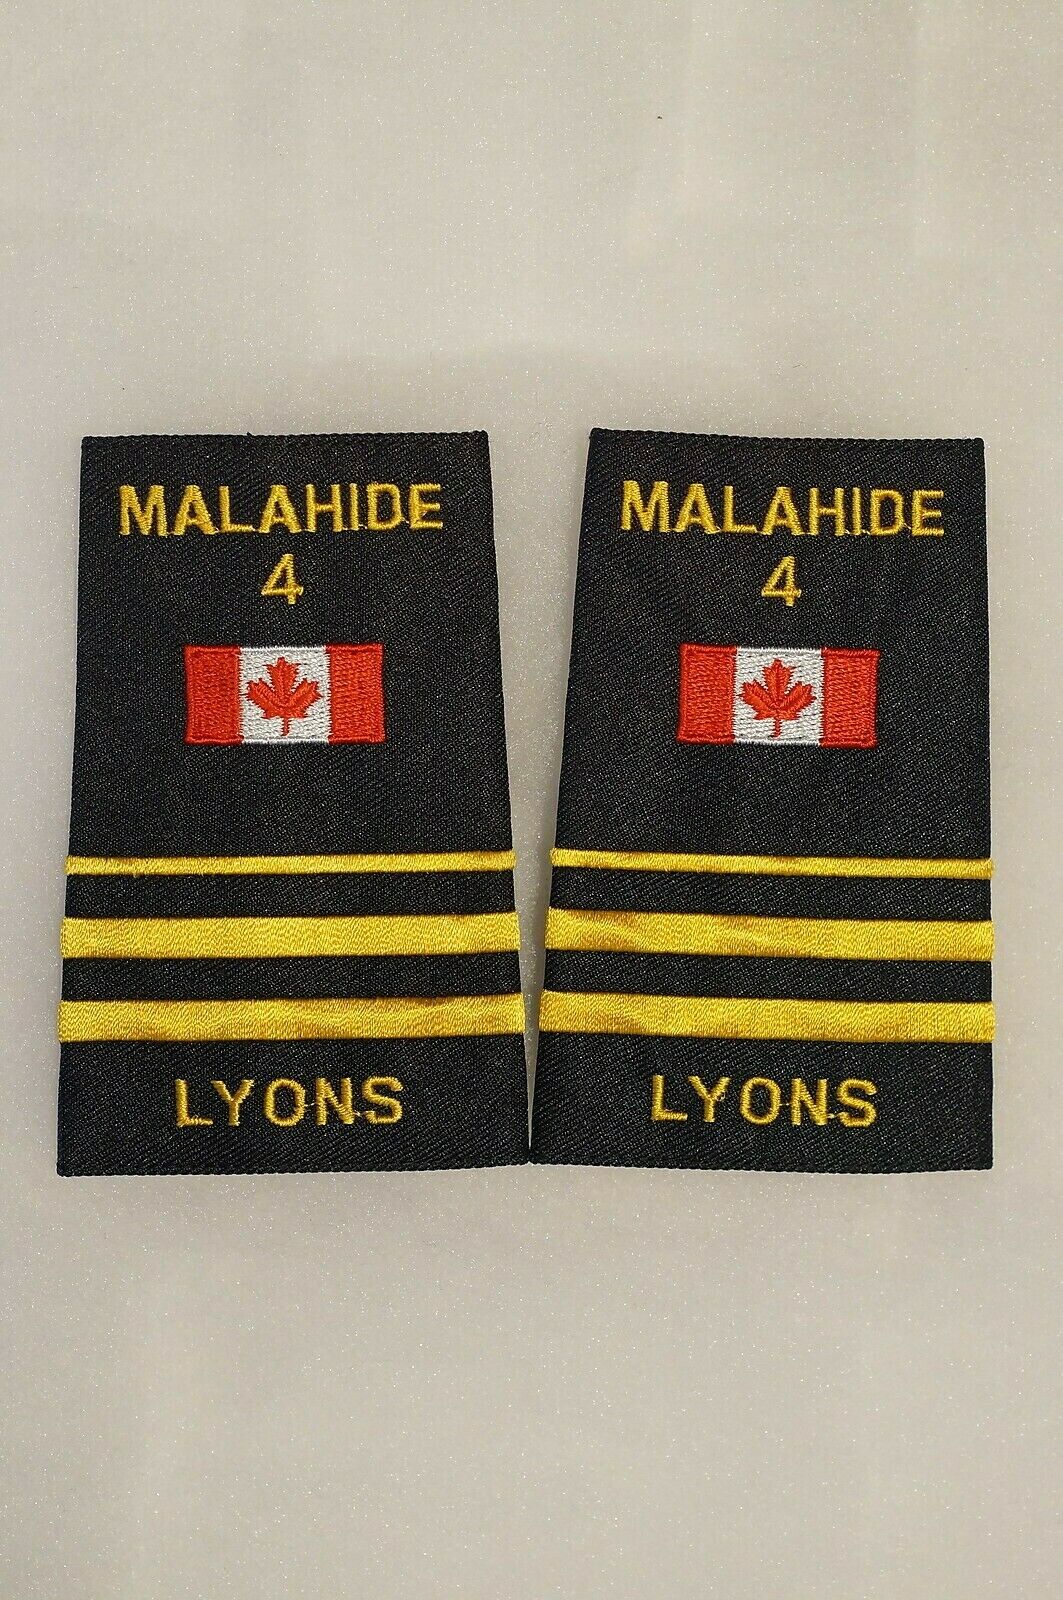 Canadian Fire Malahide 4 Lyons Platoon Chief Slip Ons Epaulettes Pair